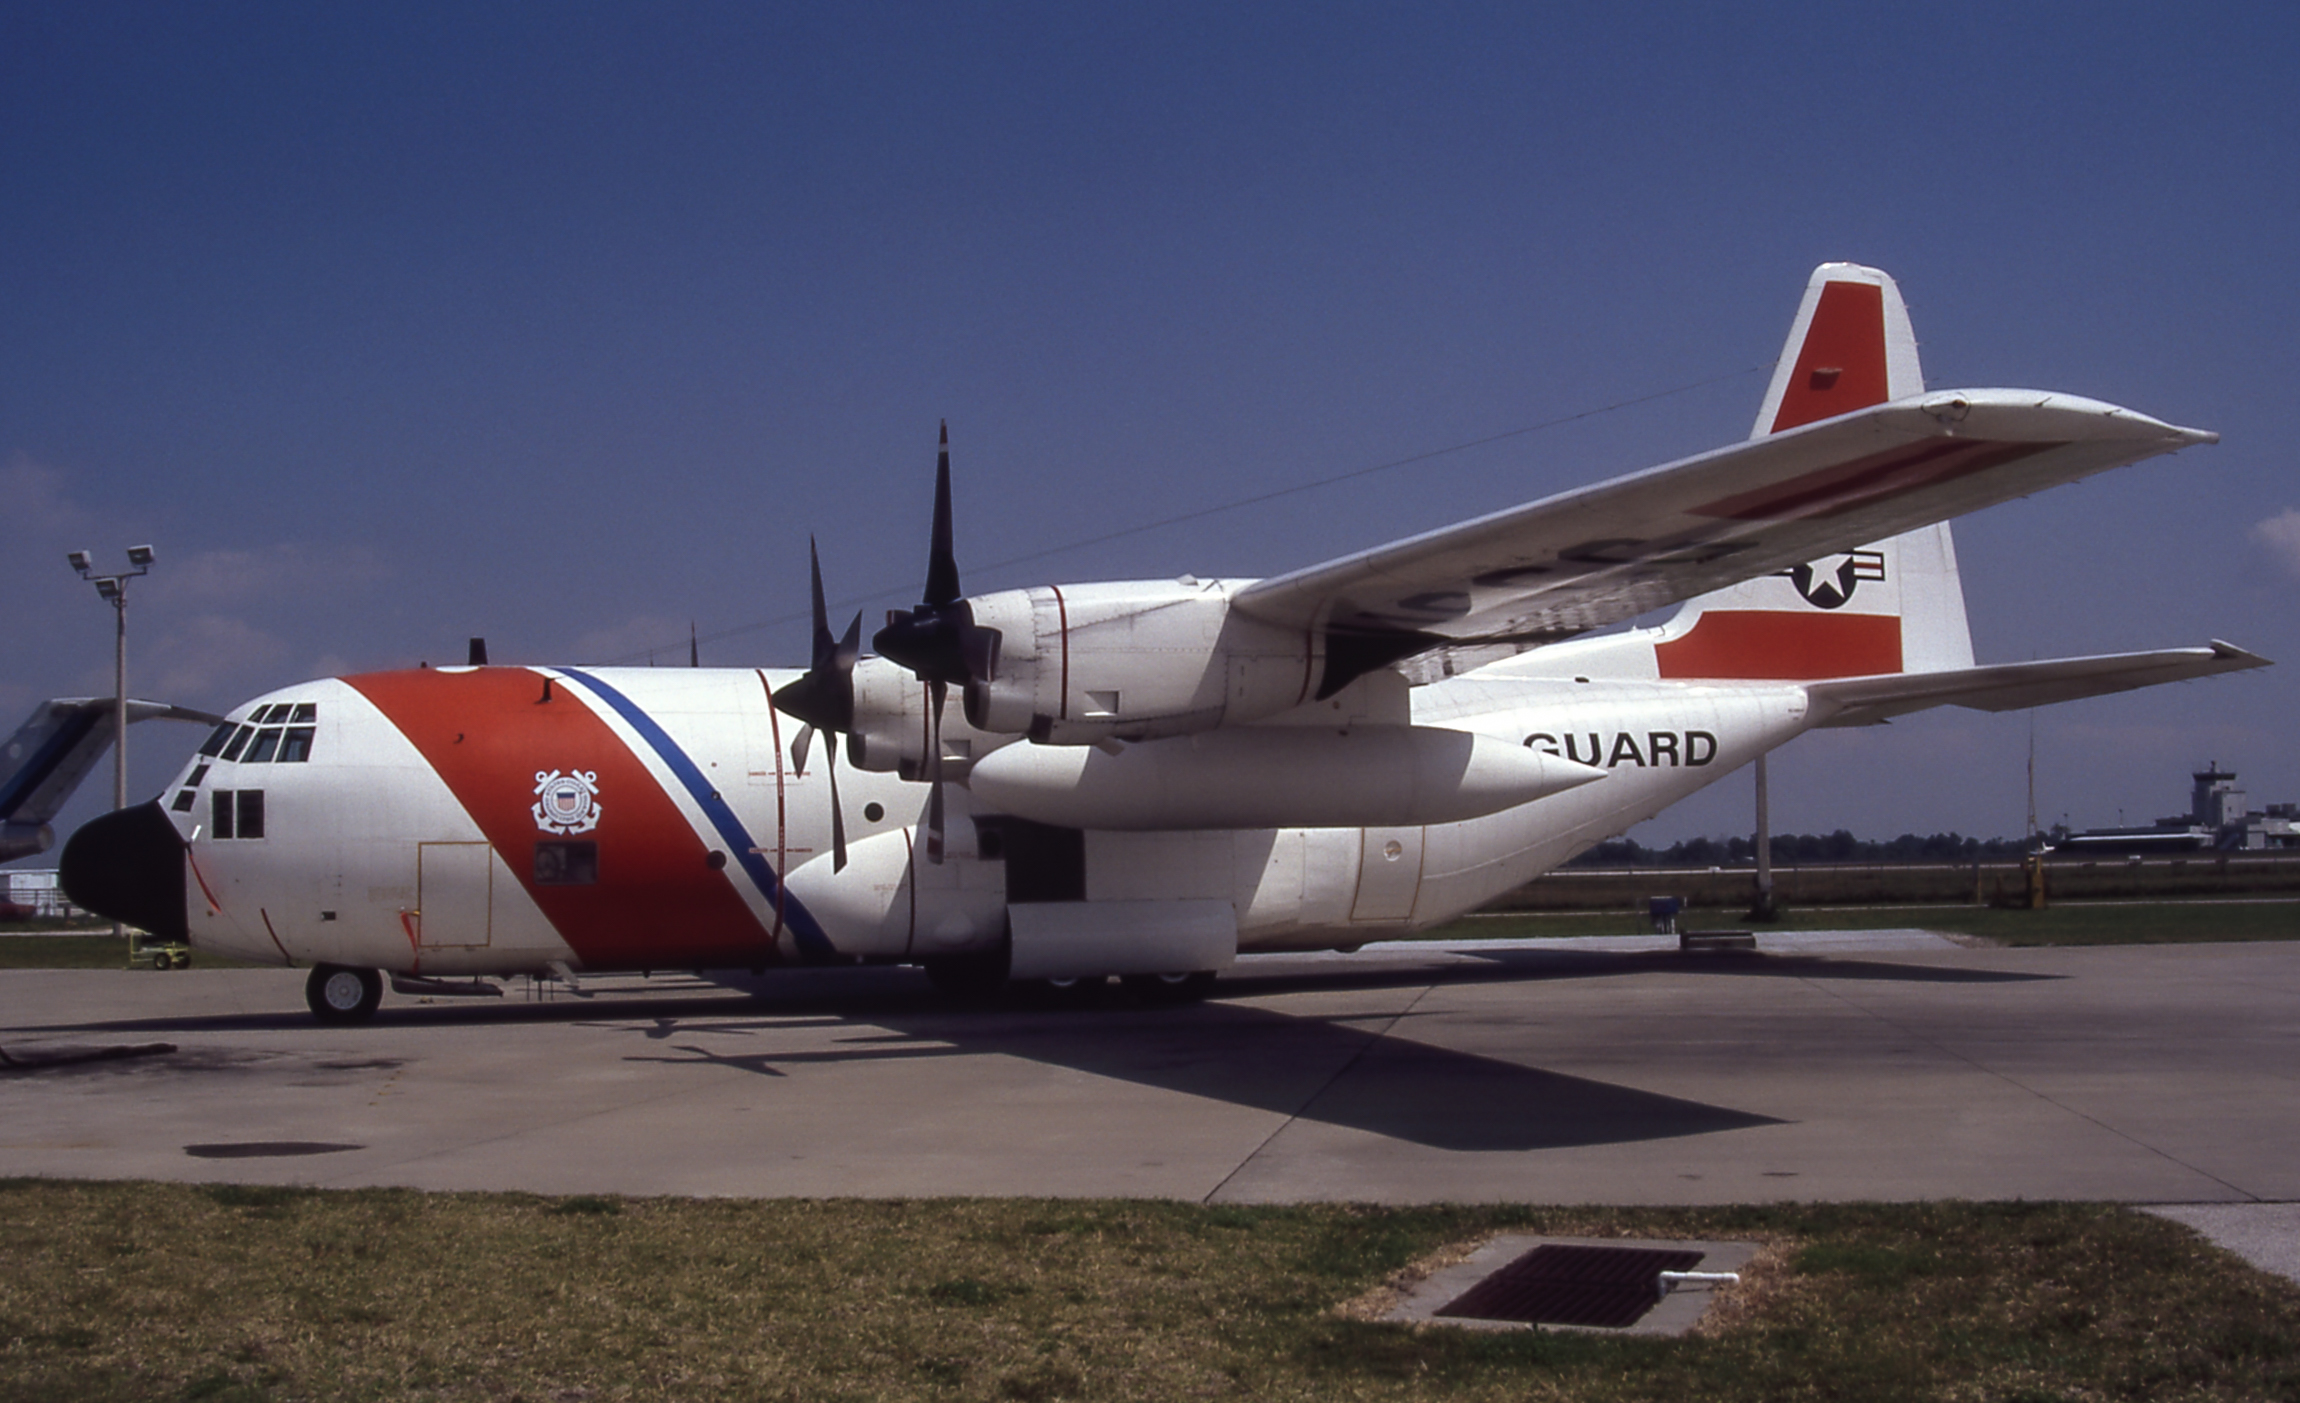 1711/1711 USCG - United States Coast Guard Lockheed C-130 Hercules Airframe Information - AVSpotters.com